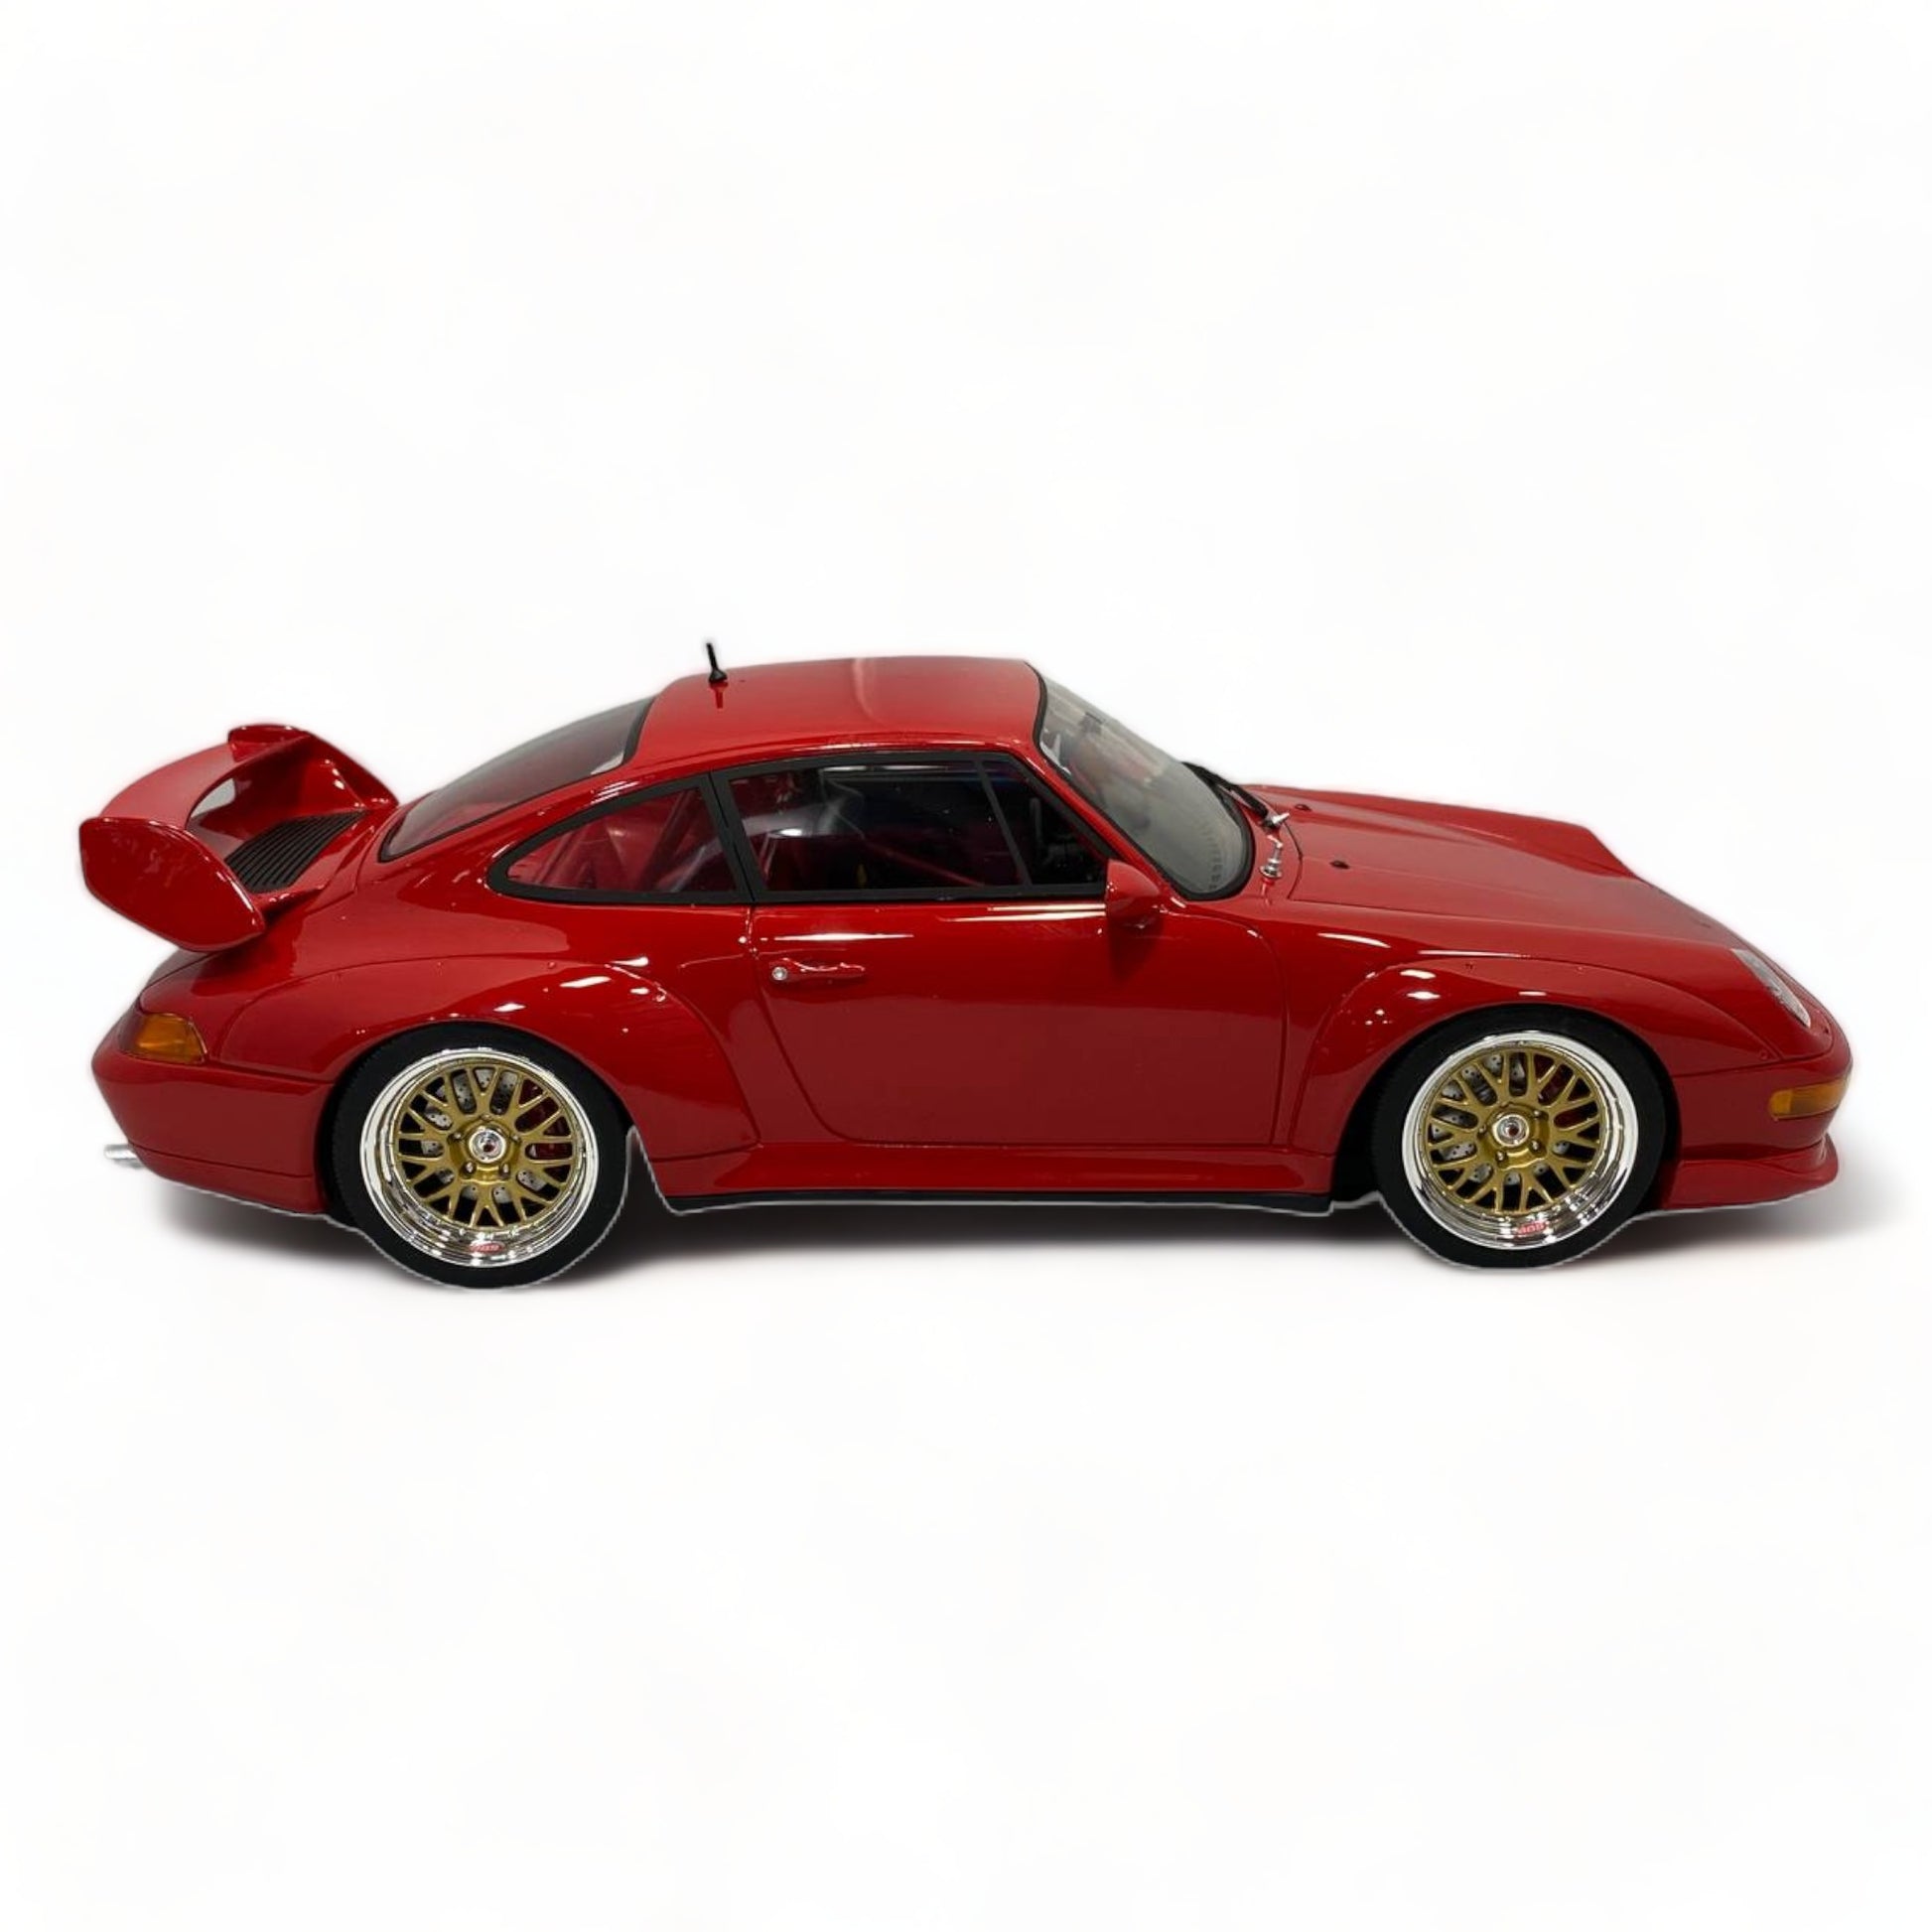 1/18 Diecast GT Spirit Porsche 911 RSR 964 in Red Scale Model Car|Sold in Dturman.com Dubai UAE.